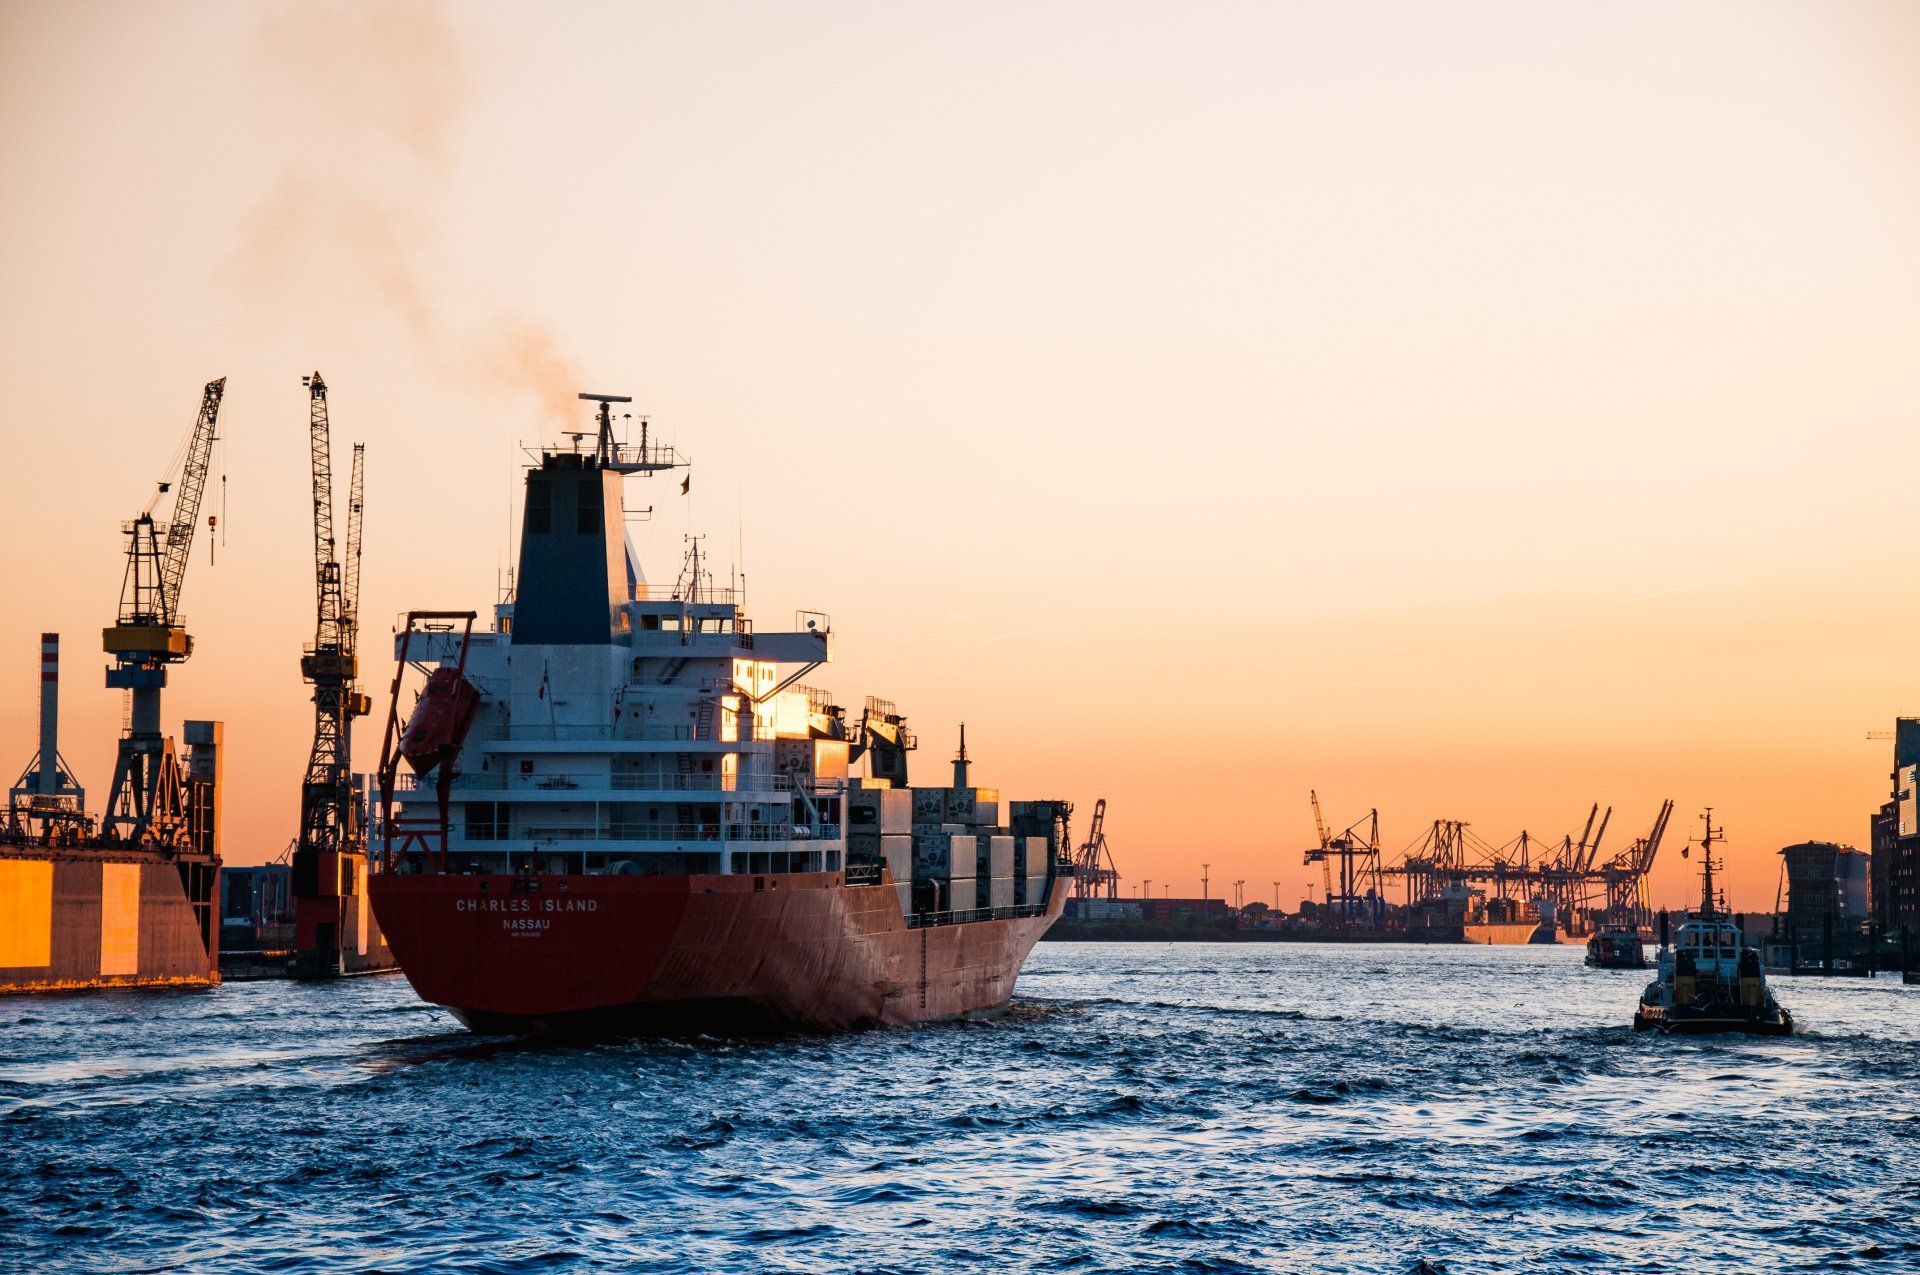 sea freight  cargo ship leaving port